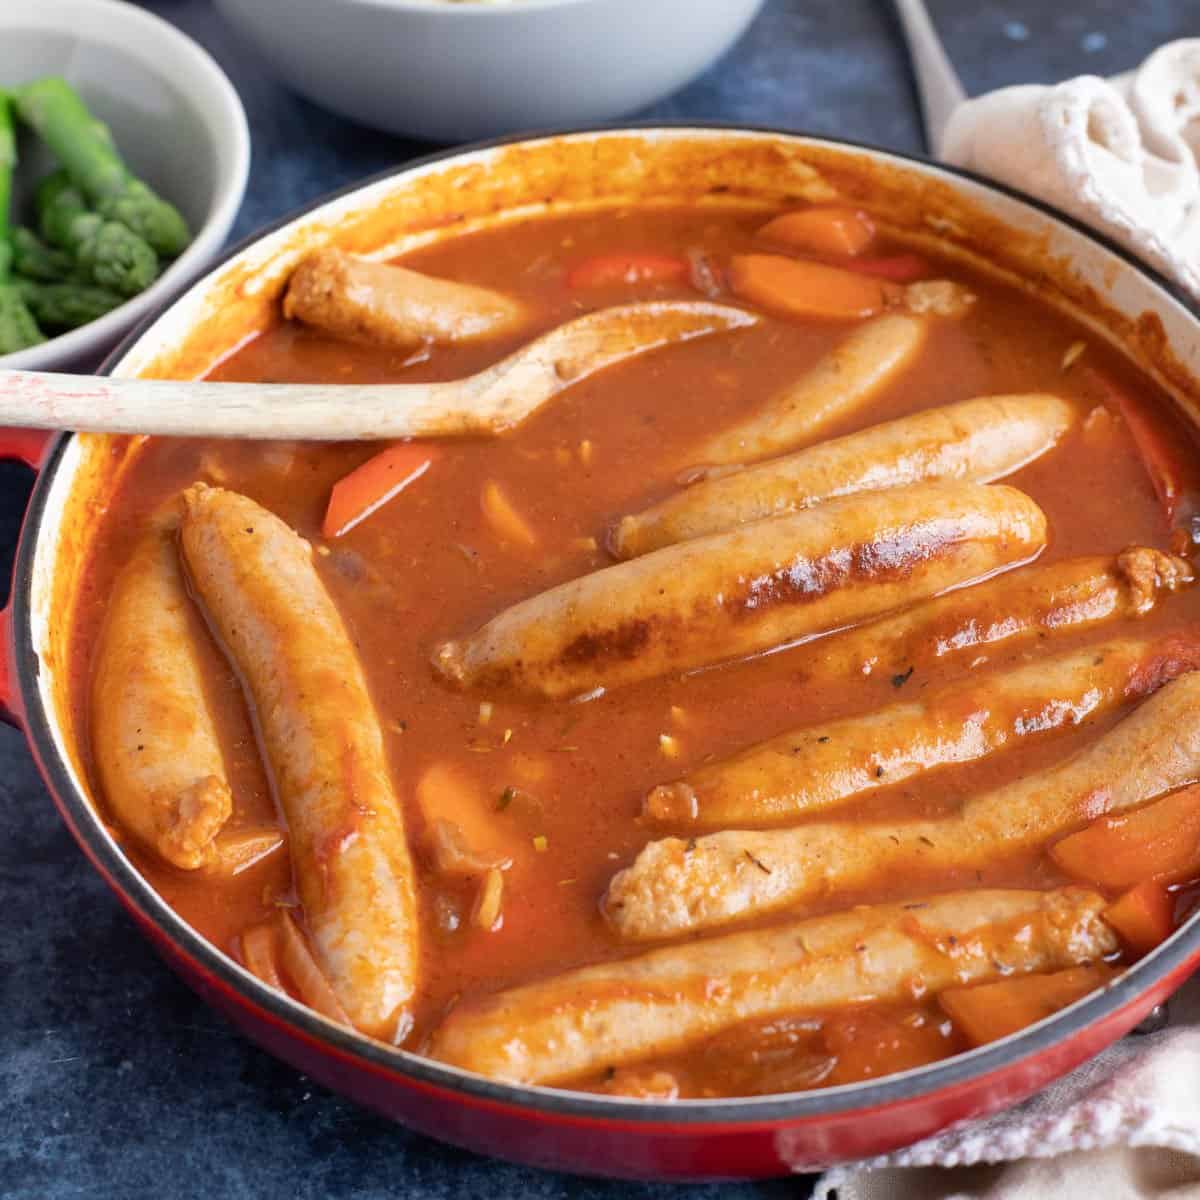 https://www.effortlessfoodie.com/wp-content/uploads/2021/02/easy-sausage-casserole-1.jpg